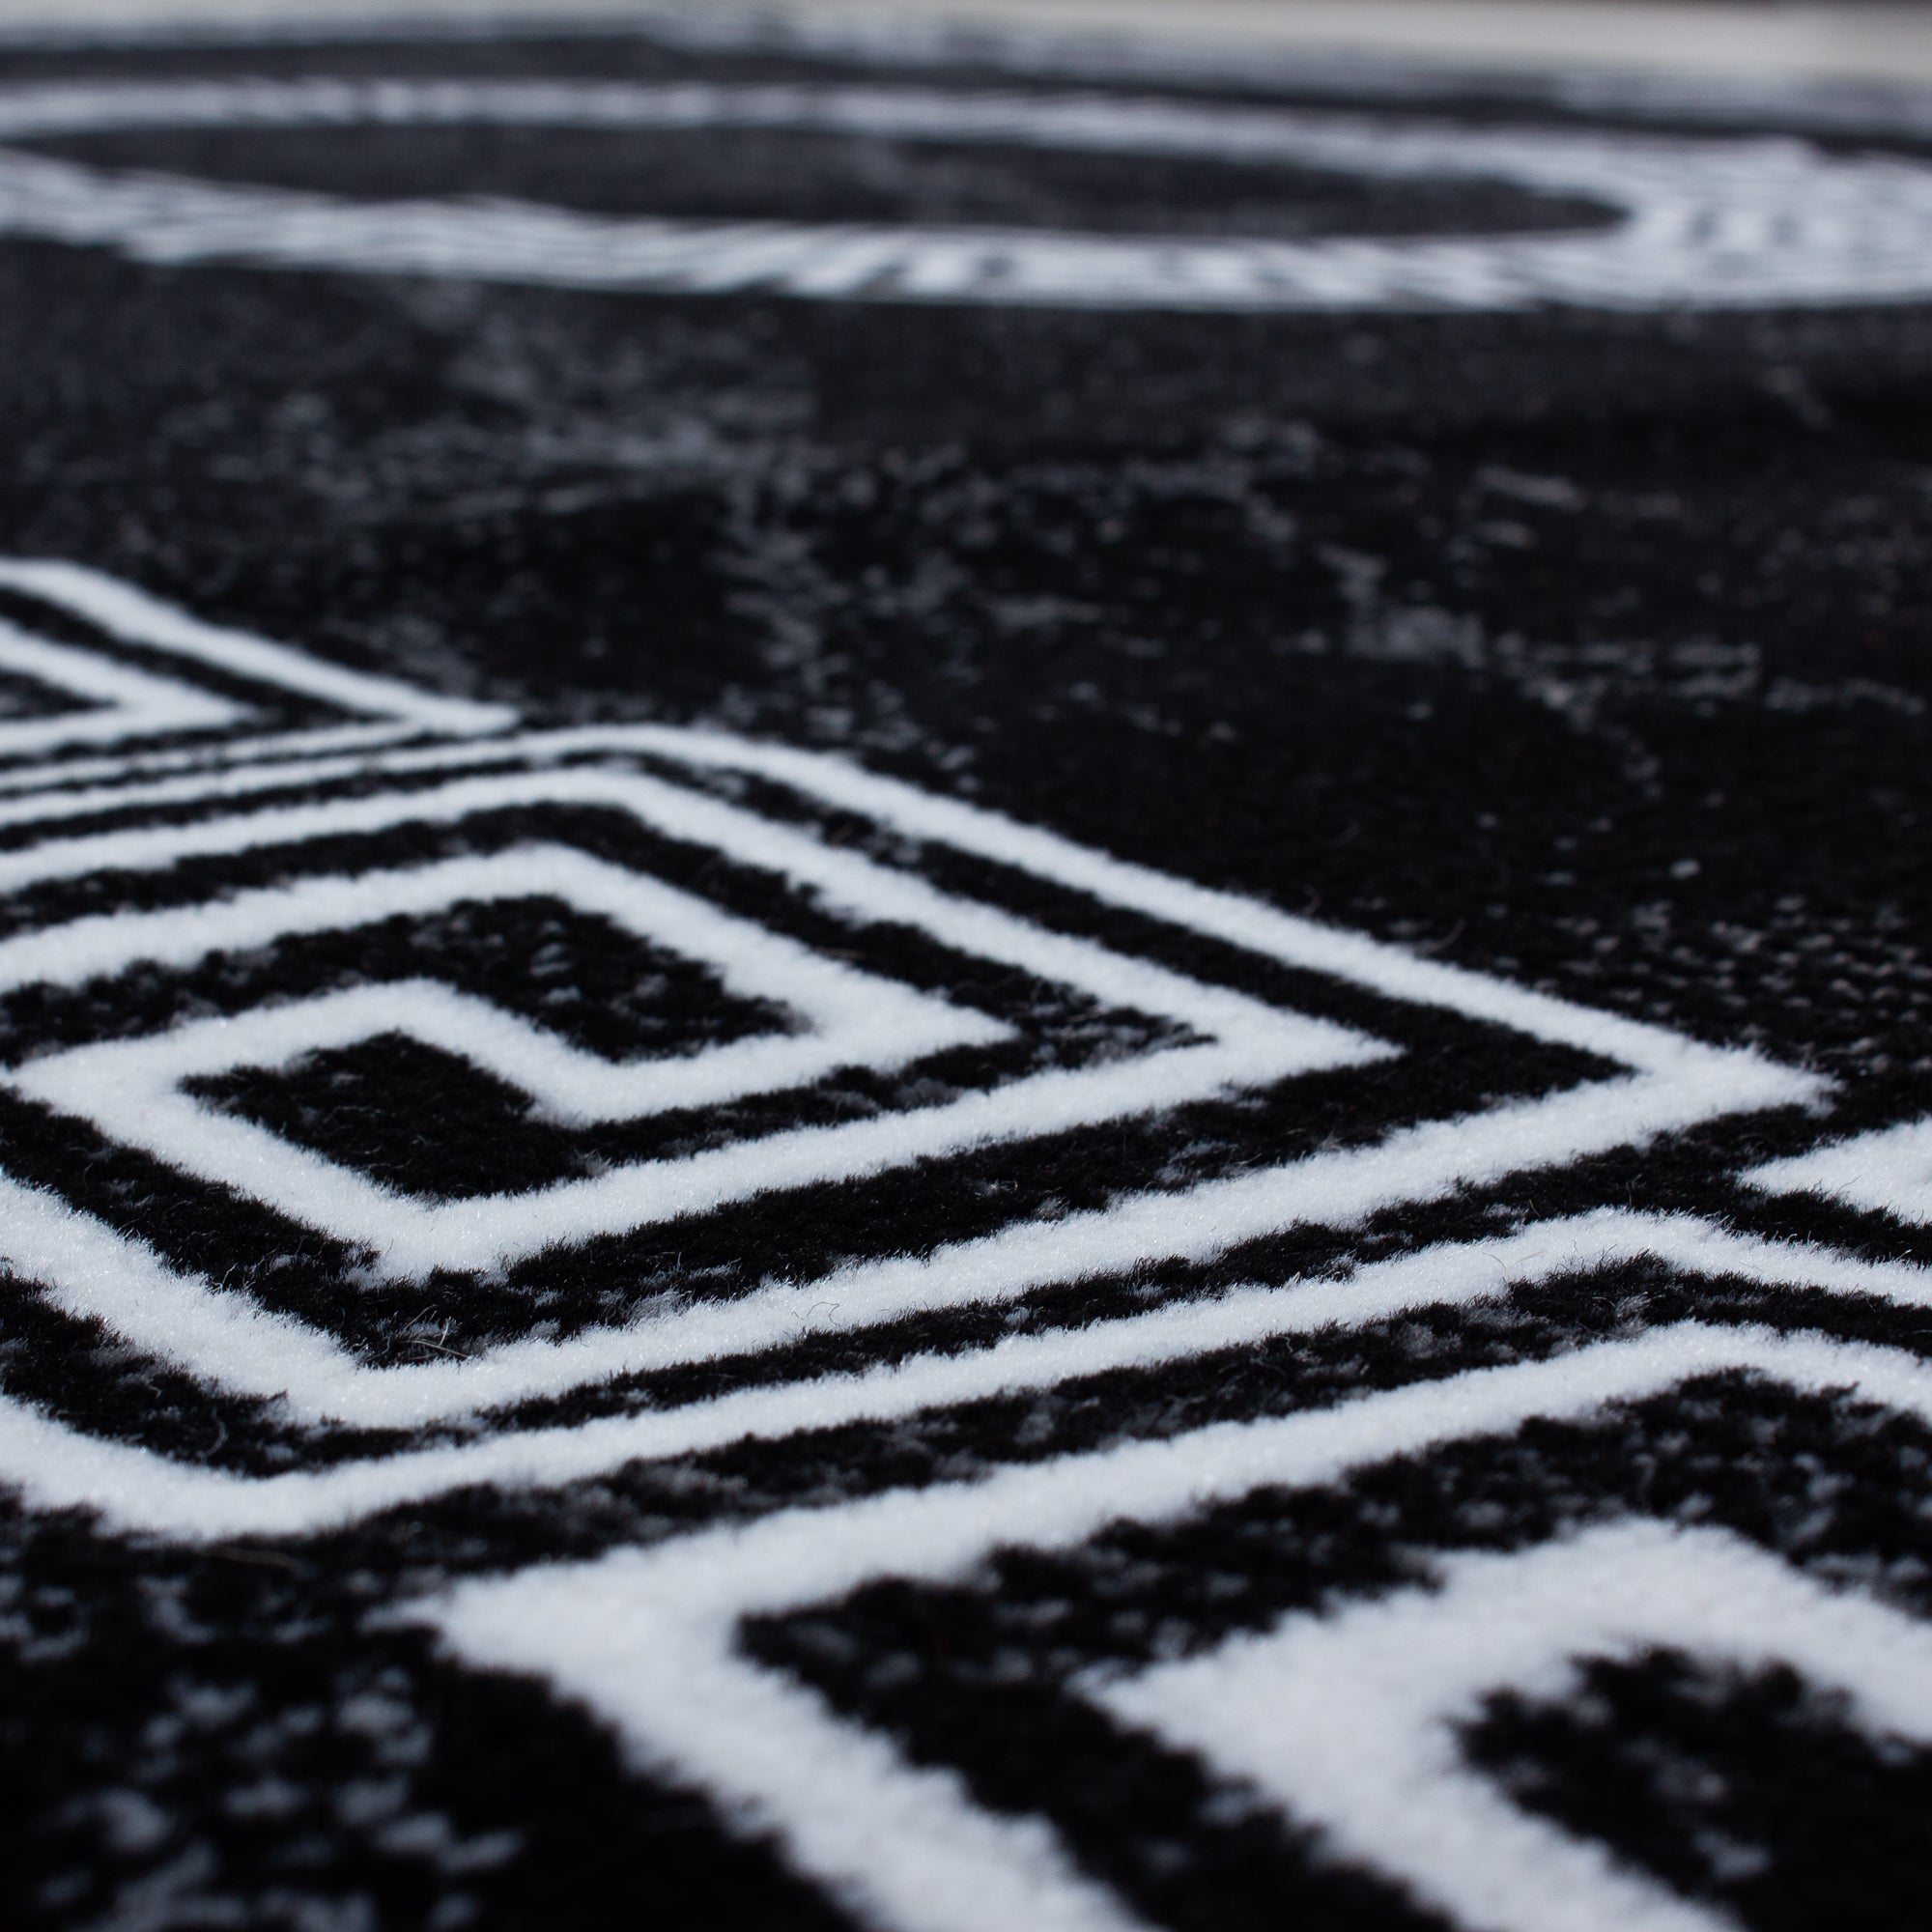 Kurzflor Design Teppich Griechisches Ornament Muster Troja Grau Schwarz Meliert